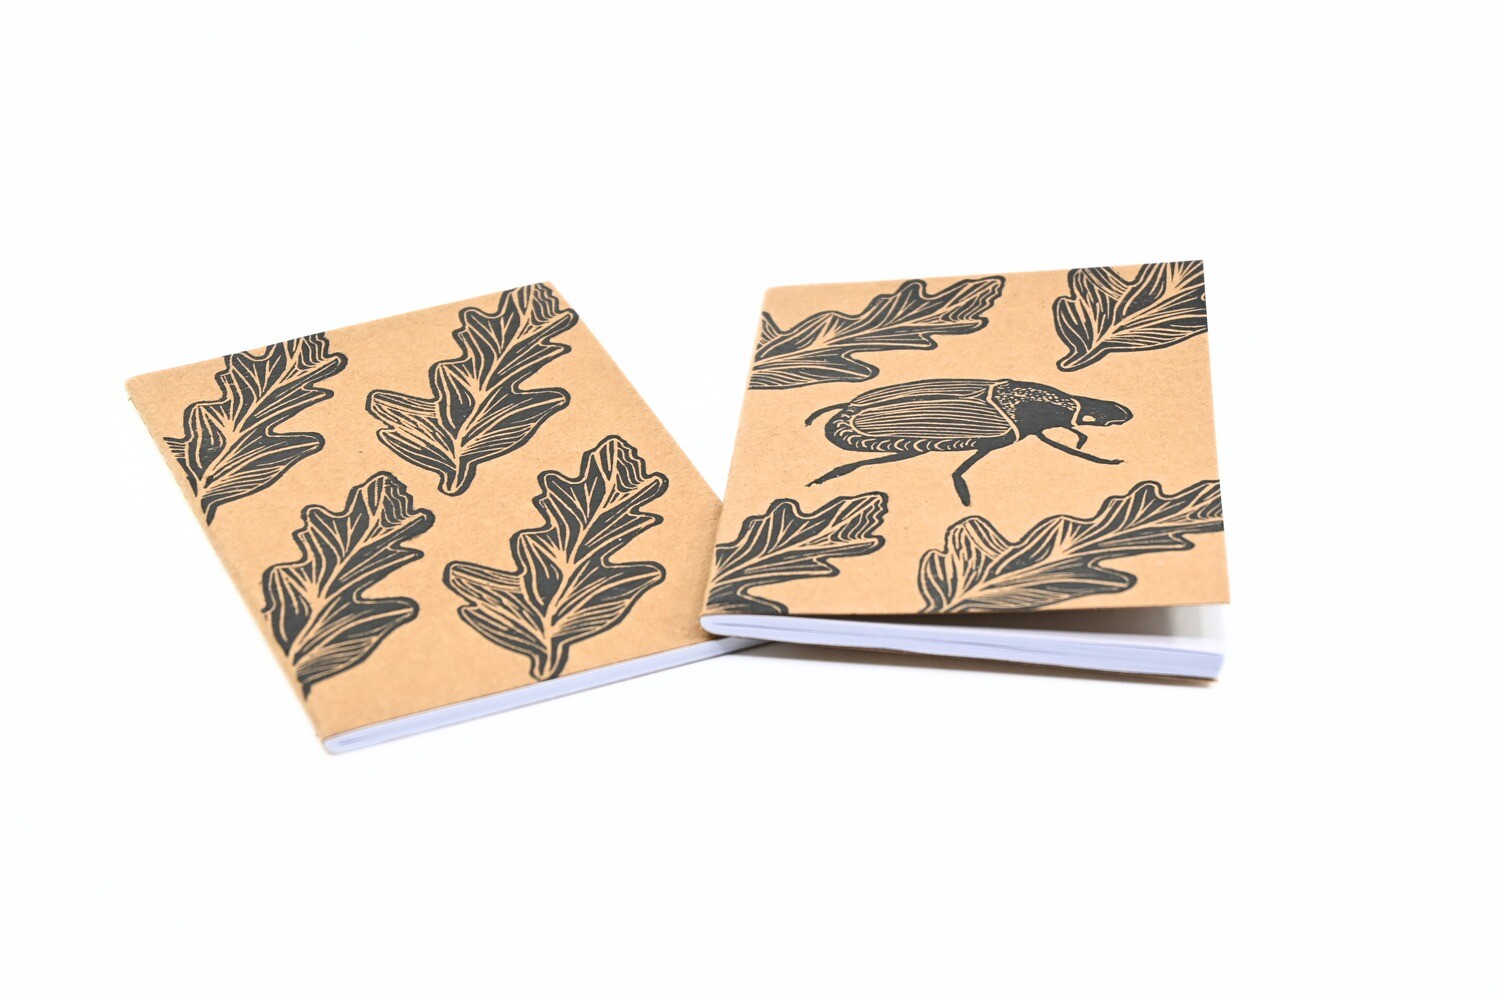 Lino Cut Notebooks